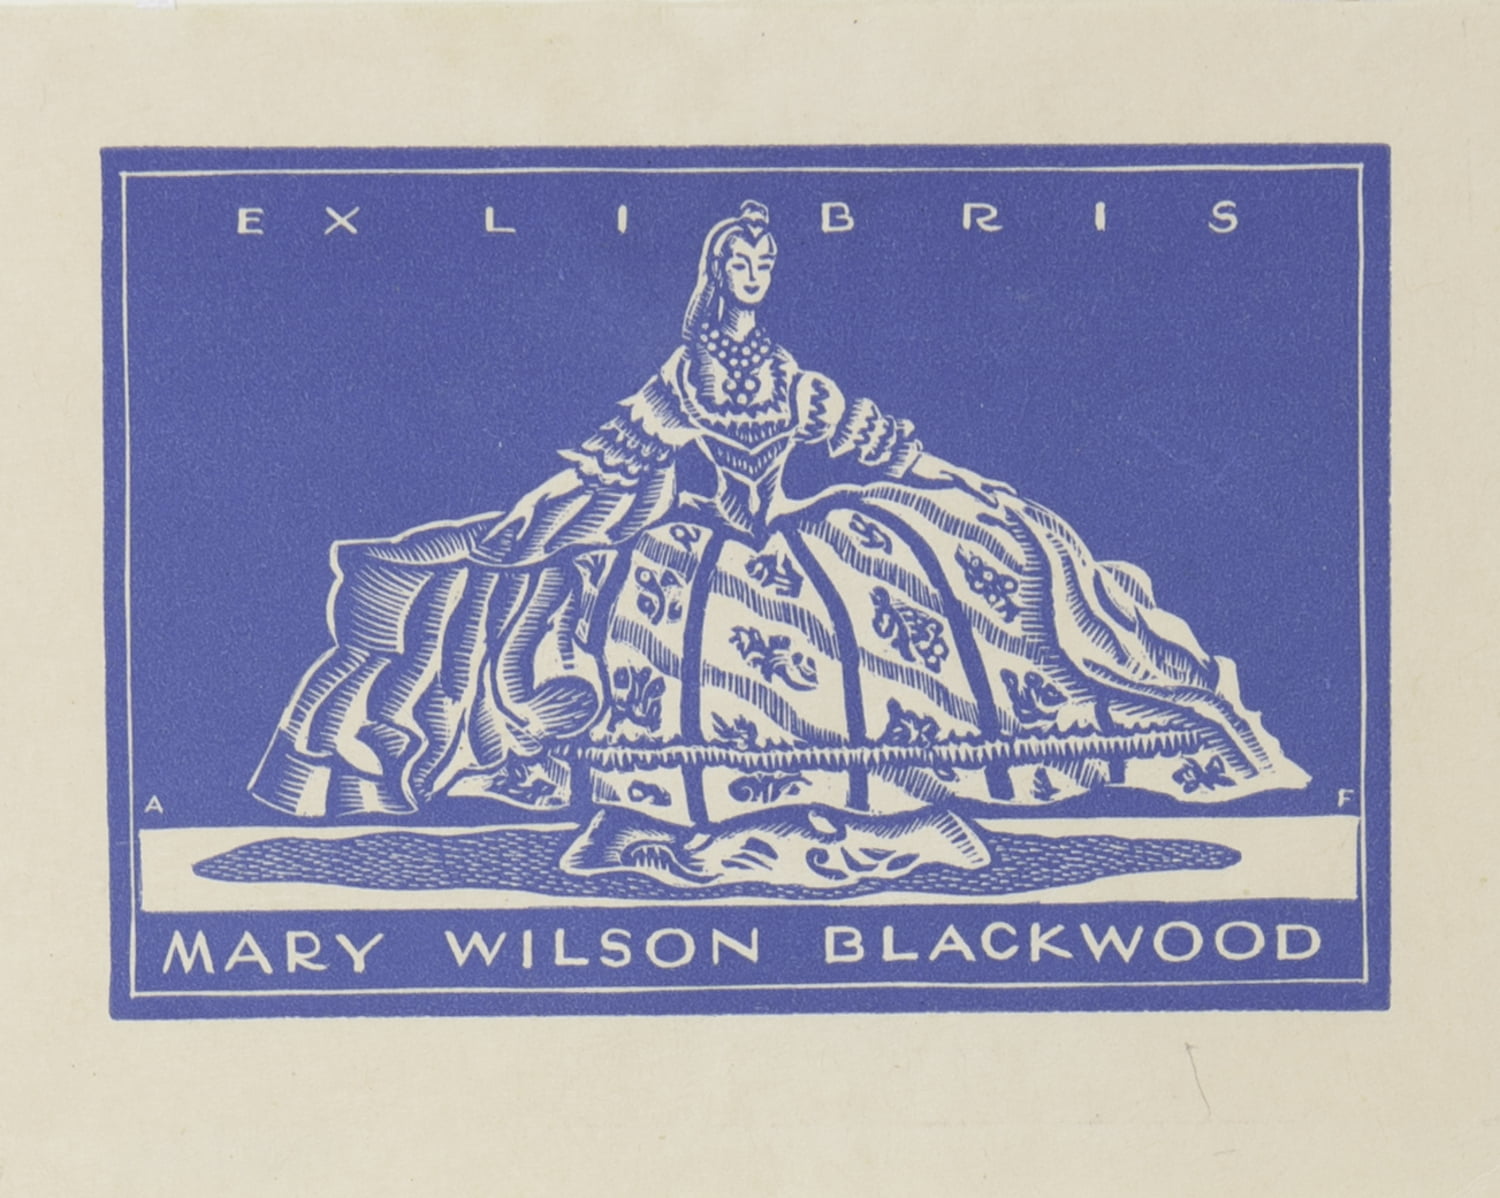 Mary Wilson Blackwood